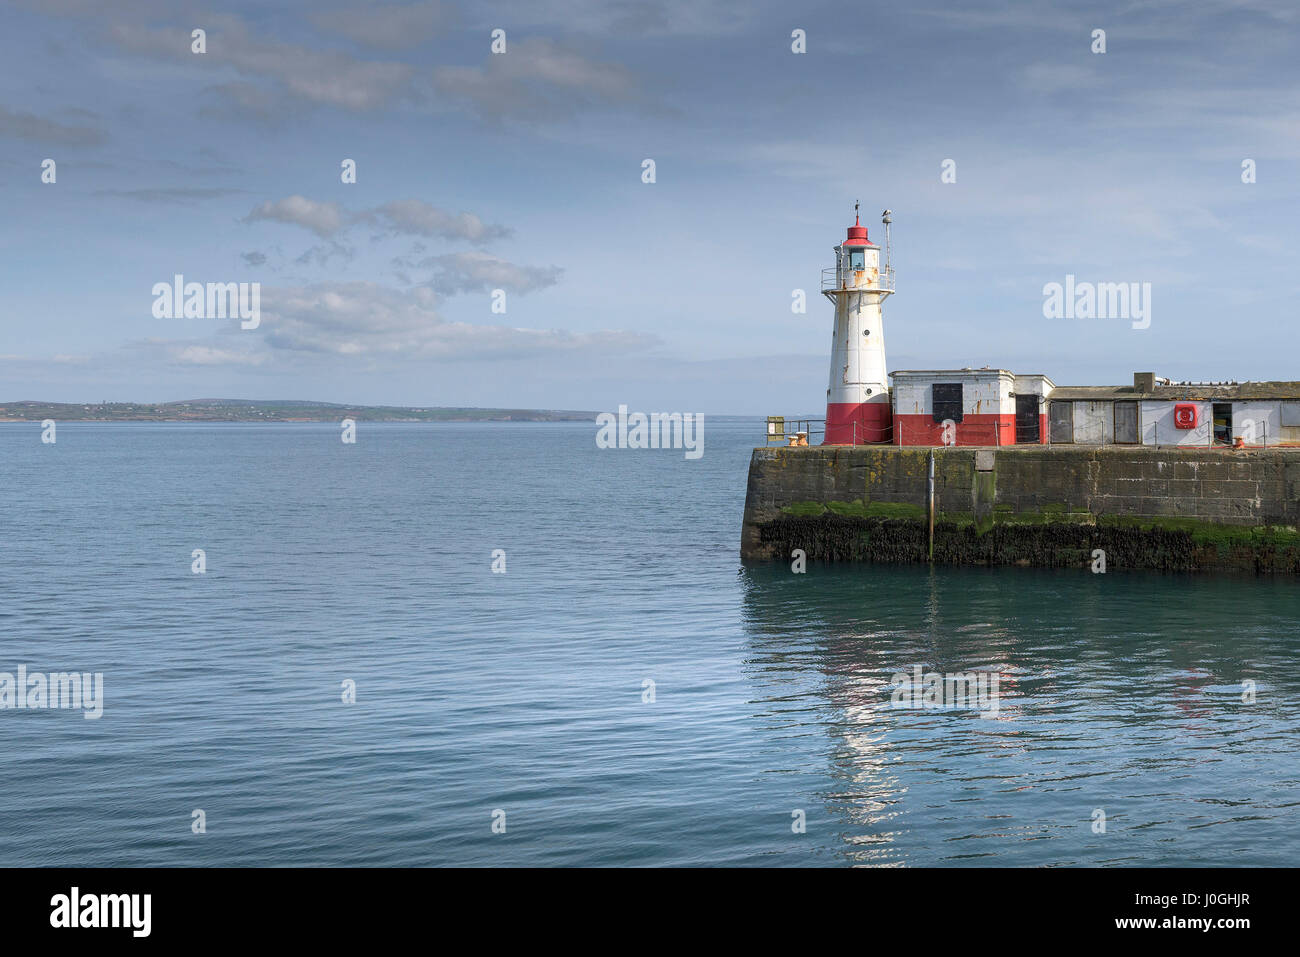 Newlyn Lighthouse Entrance Fishing Port Harbour Harbor Sea Quay Coast Coastal scene Cornwall Stock Photo